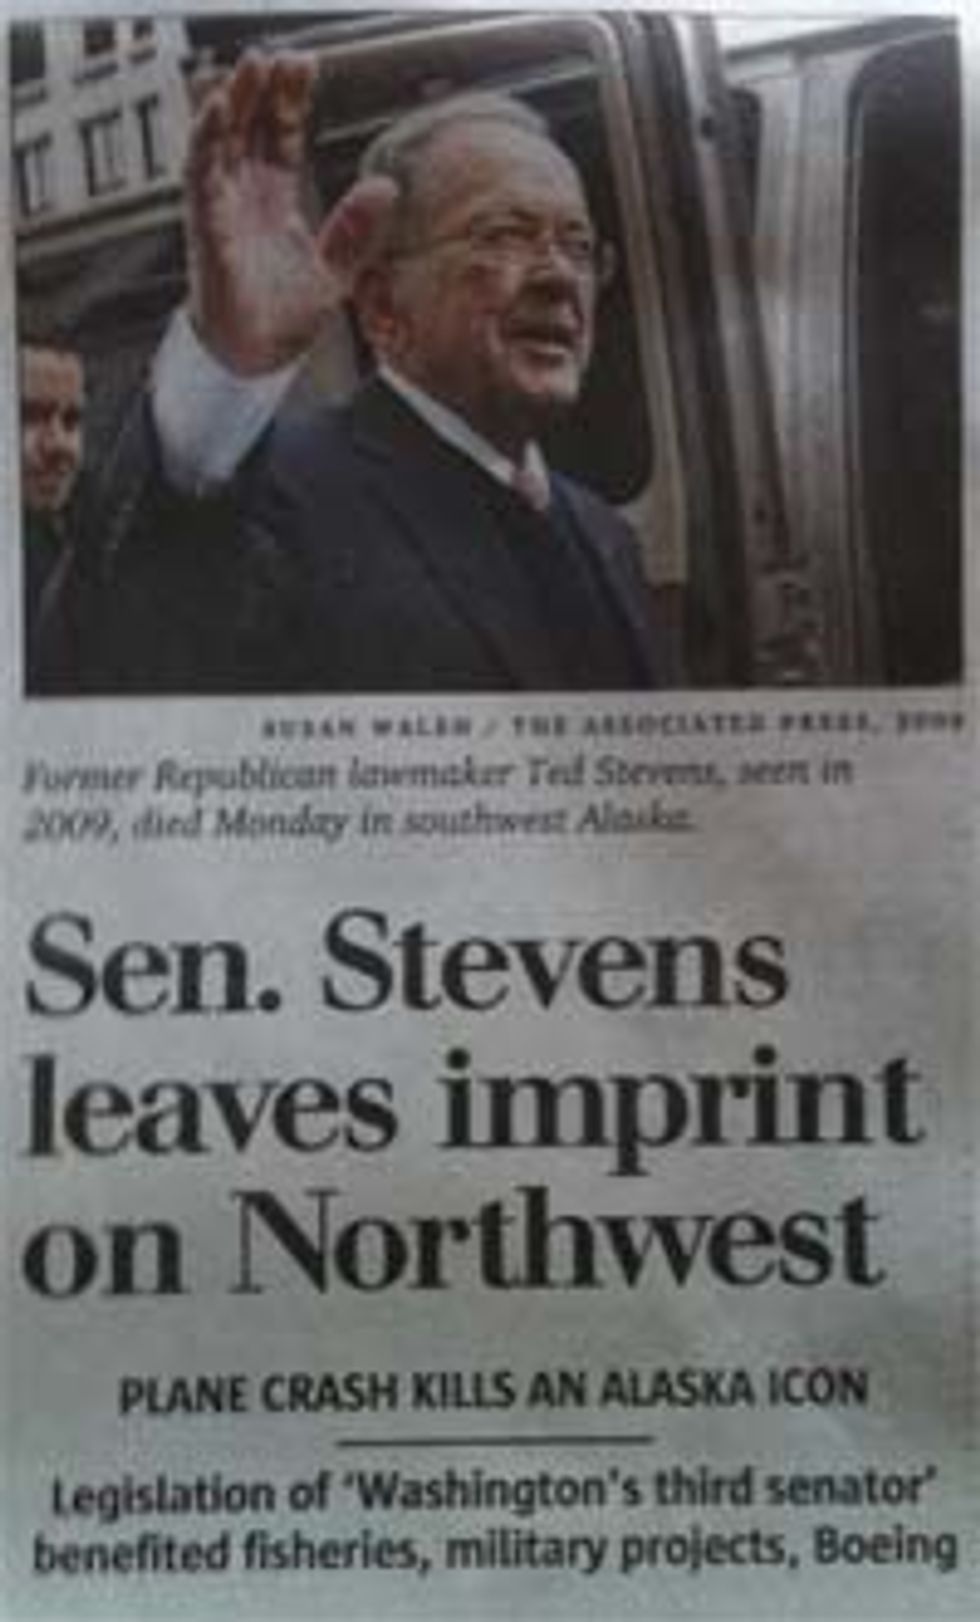 Seattle Times Defiles Memory Of Ted Stevens, Sarah Palin's Best Friend